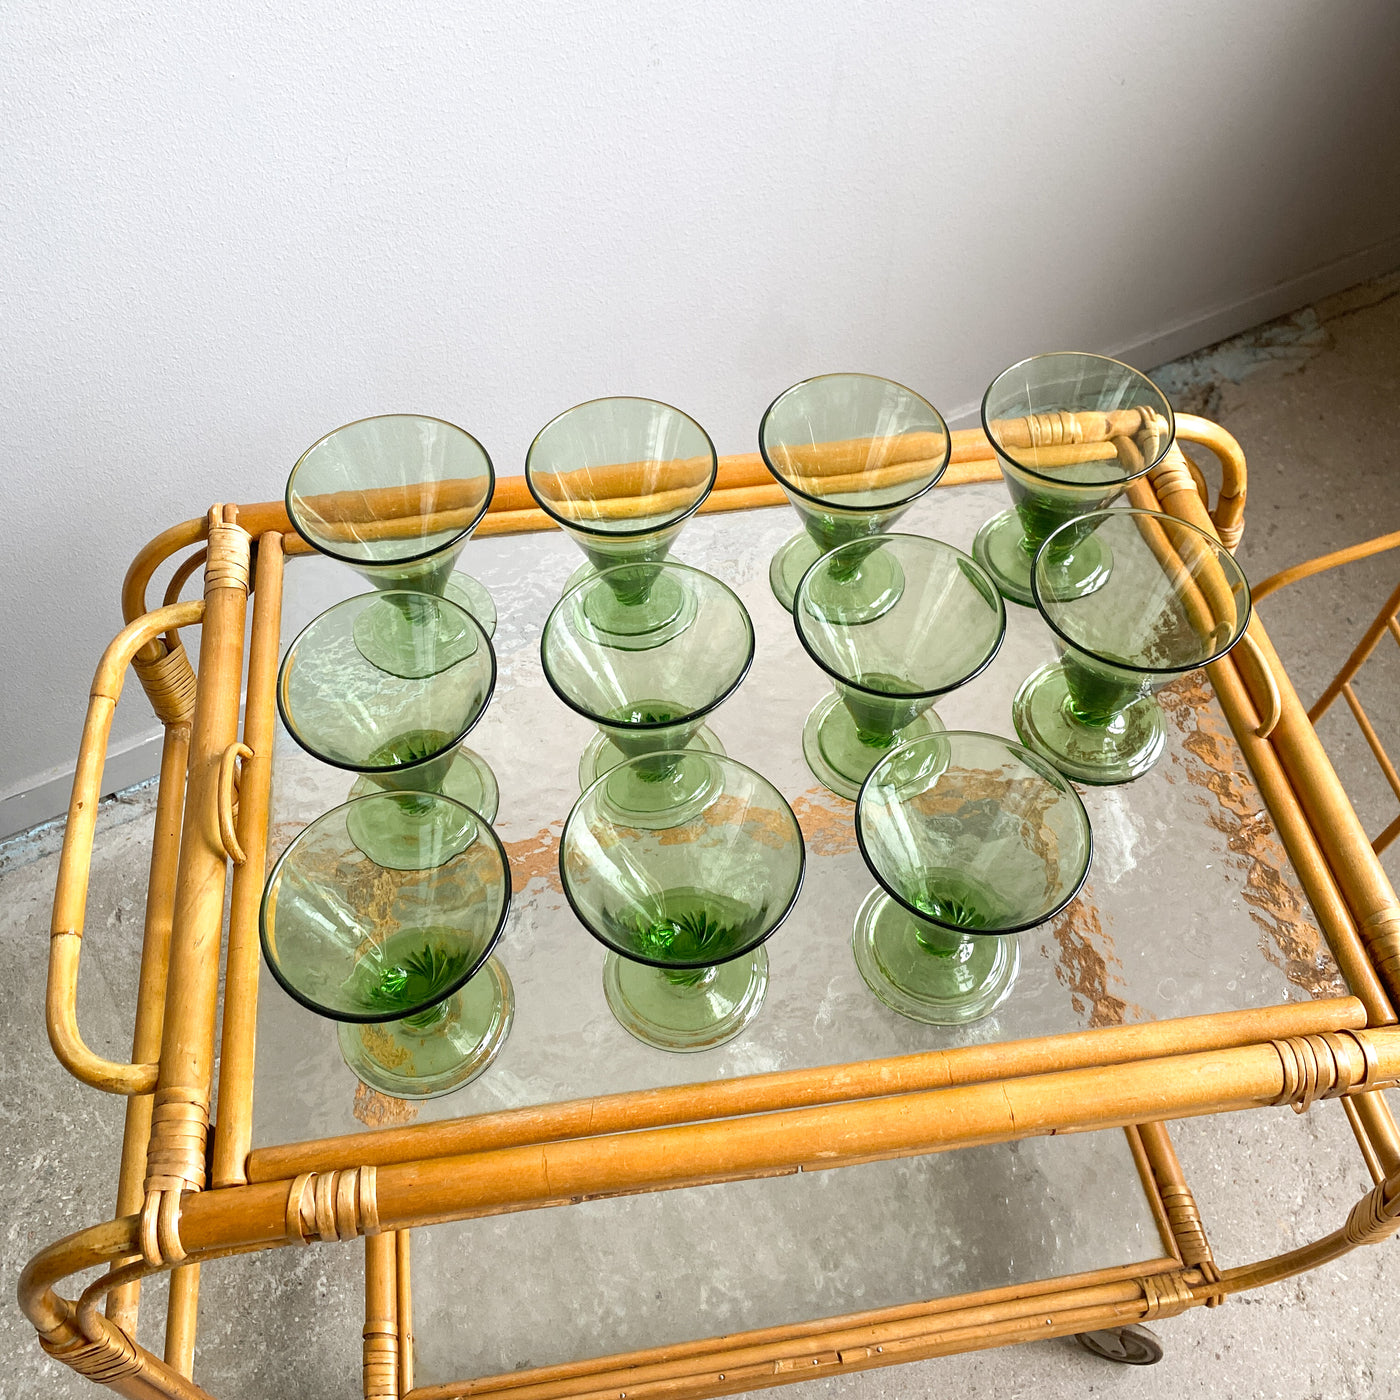 11 st gröna glas på fot